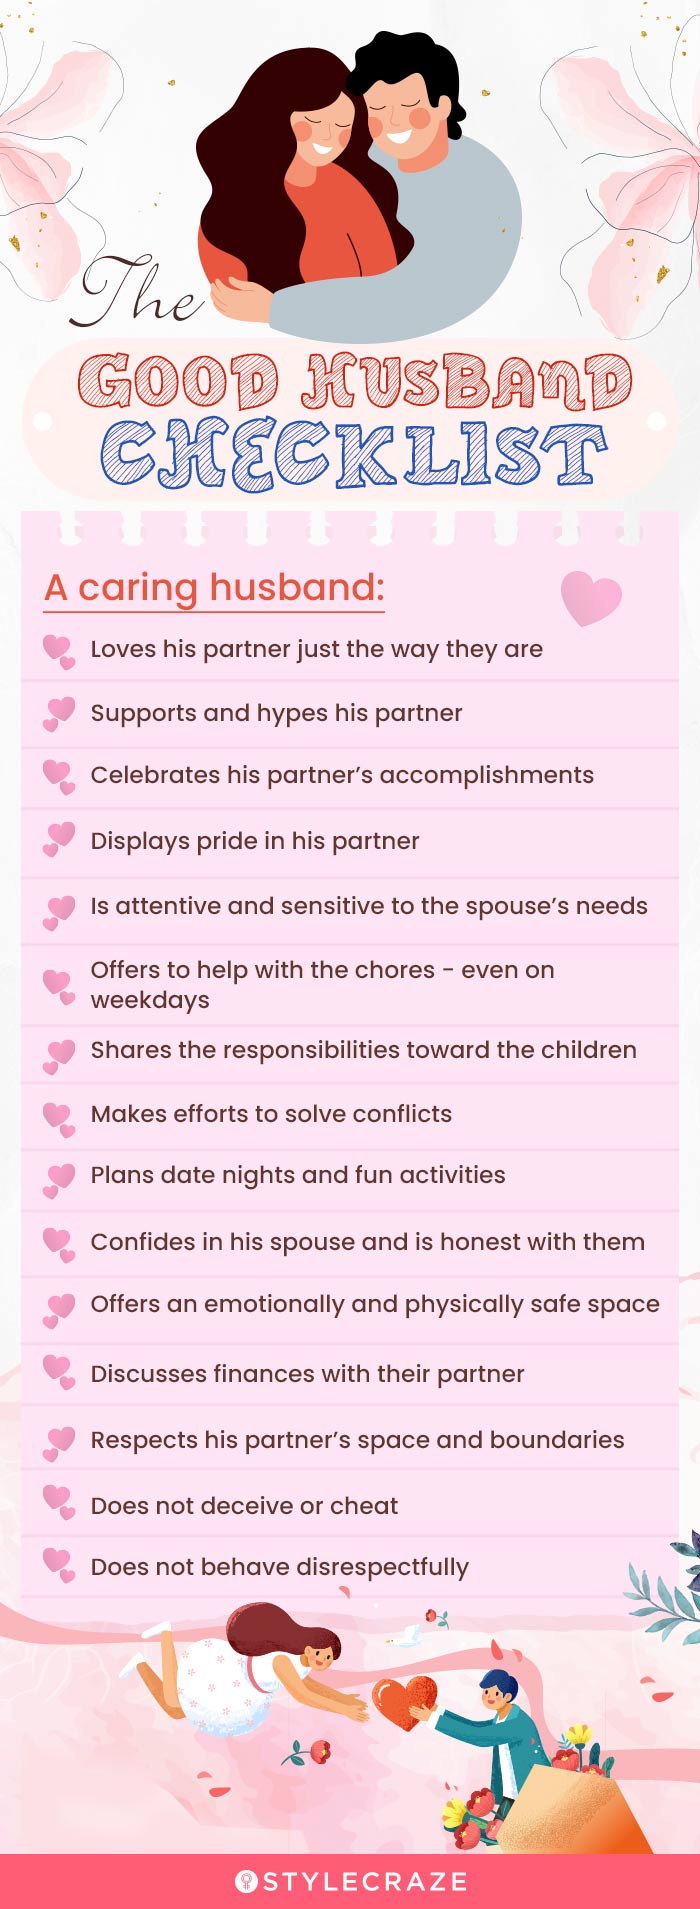 the good husband checklist [infographic]